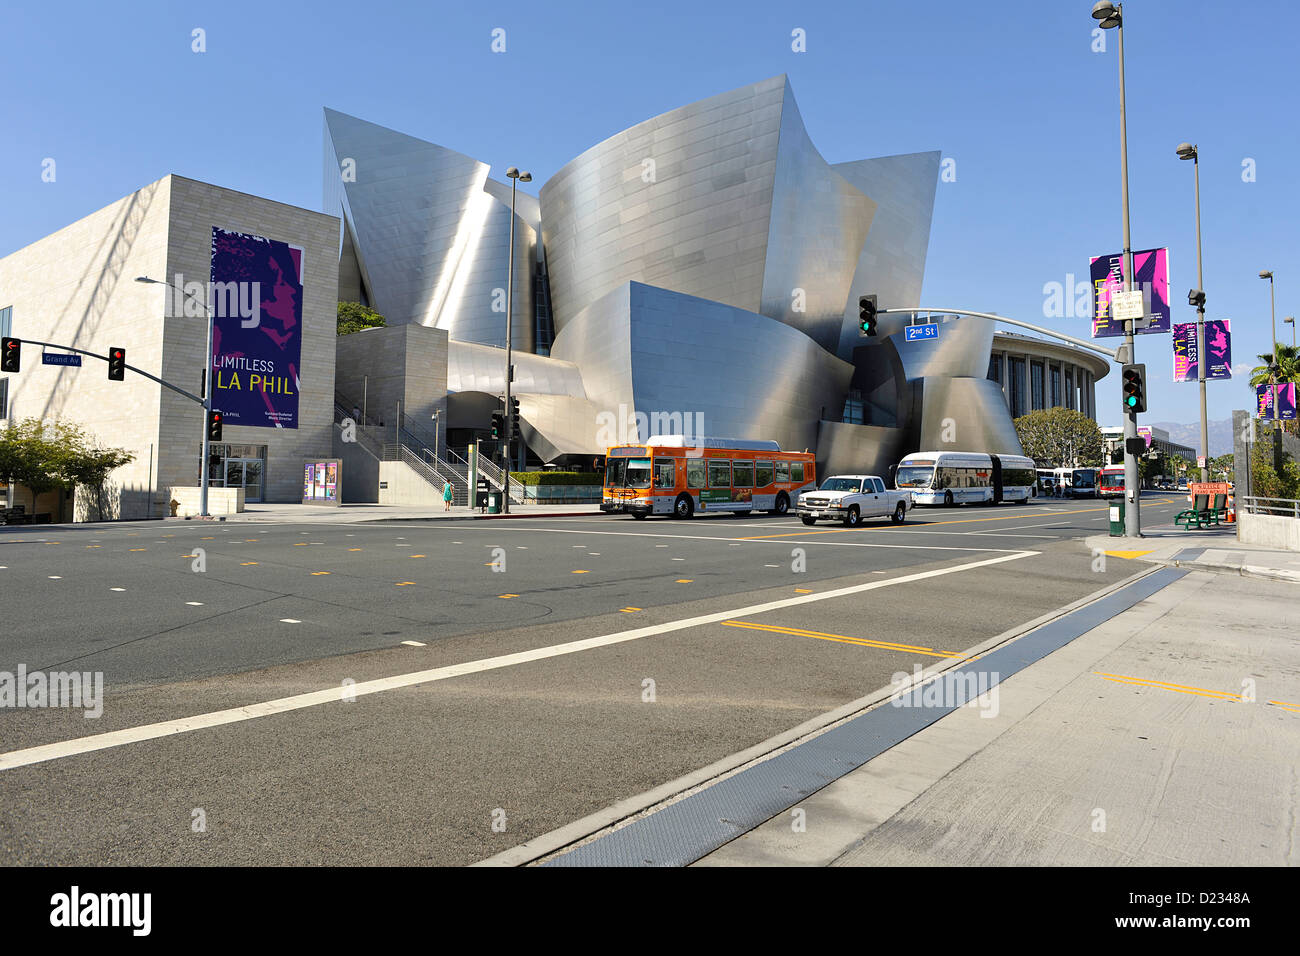 Walt Disney Concert Hall, Los Angeles, Californie, conçu par Frank O. Gehry. Banque D'Images